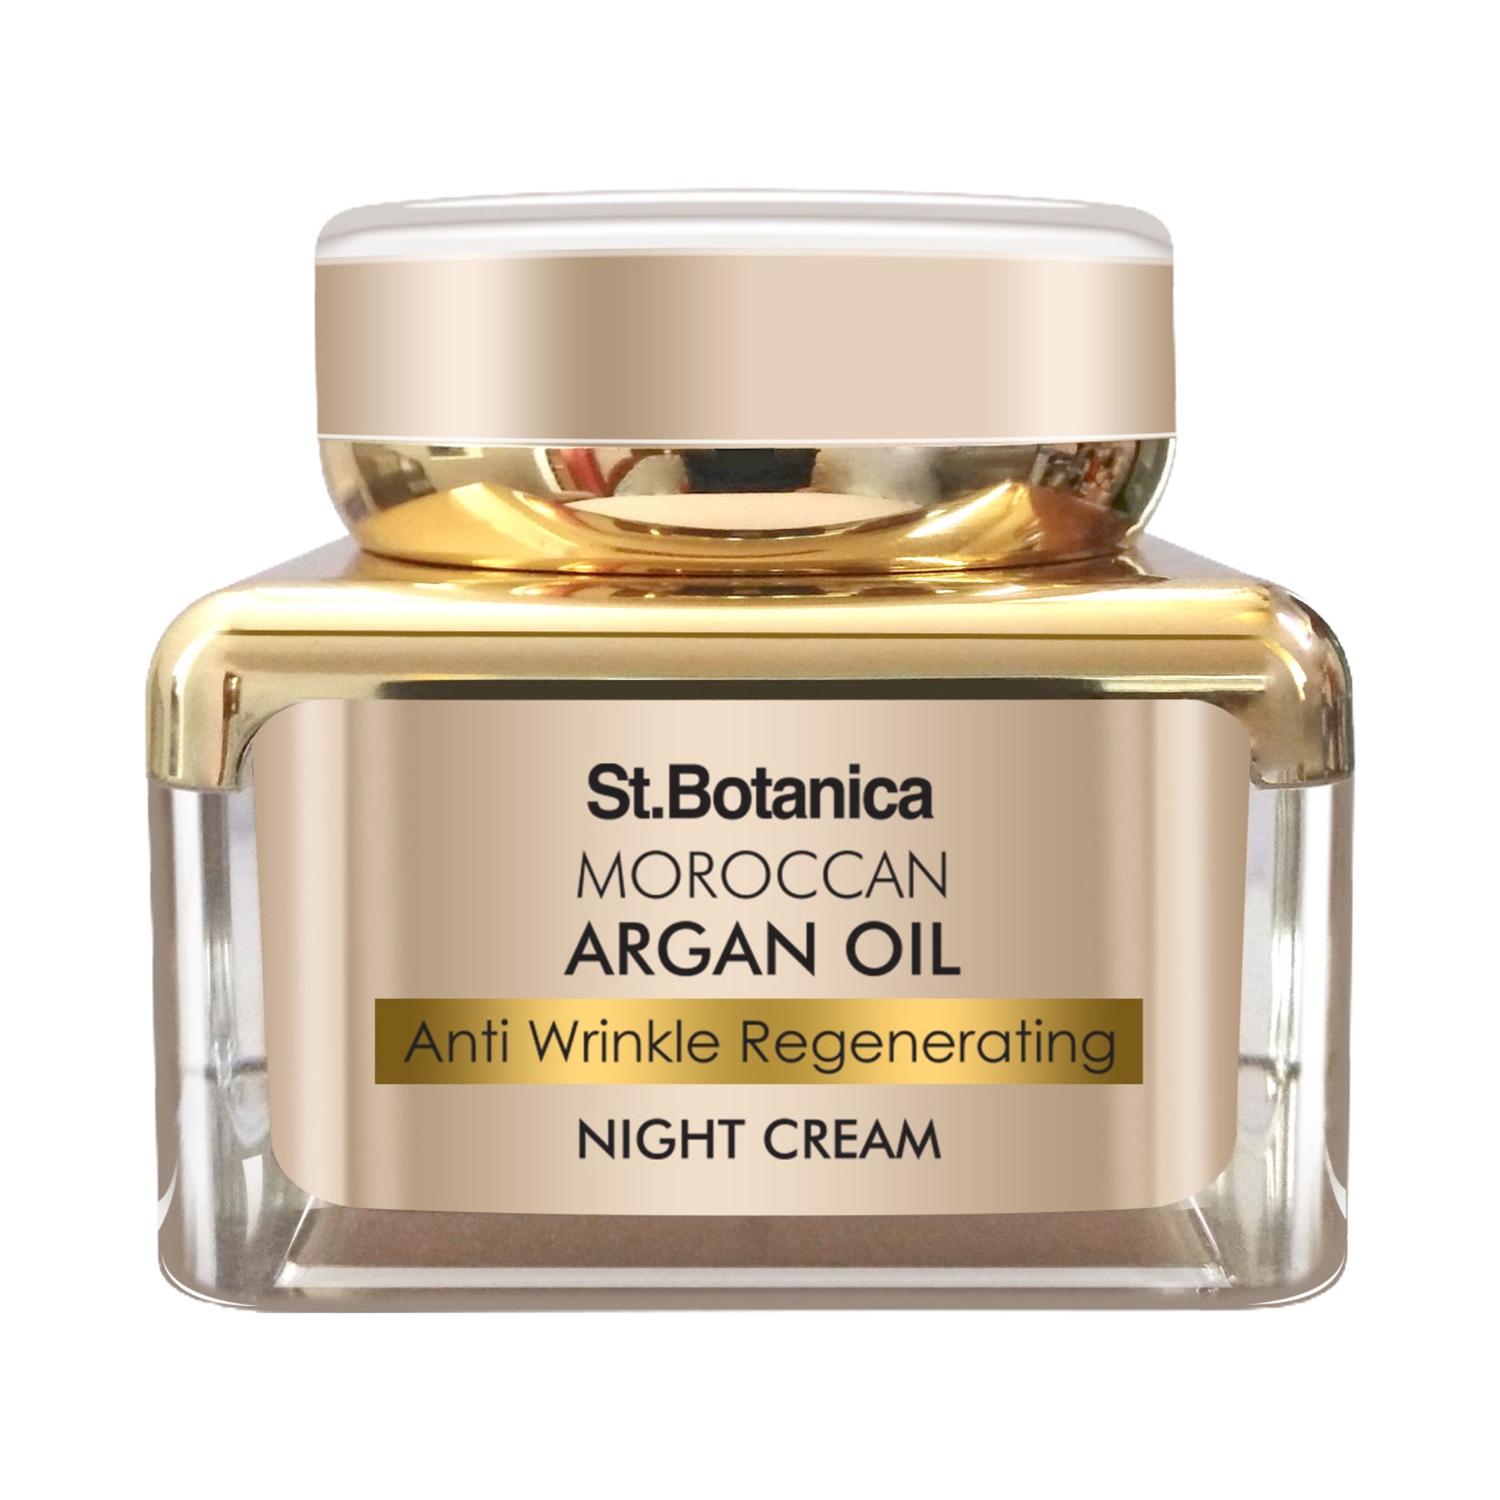 St.Botanica | St.Botanica Moroccan Argan Oil Anti Wrinkle Regenerating Night Cream (50g)